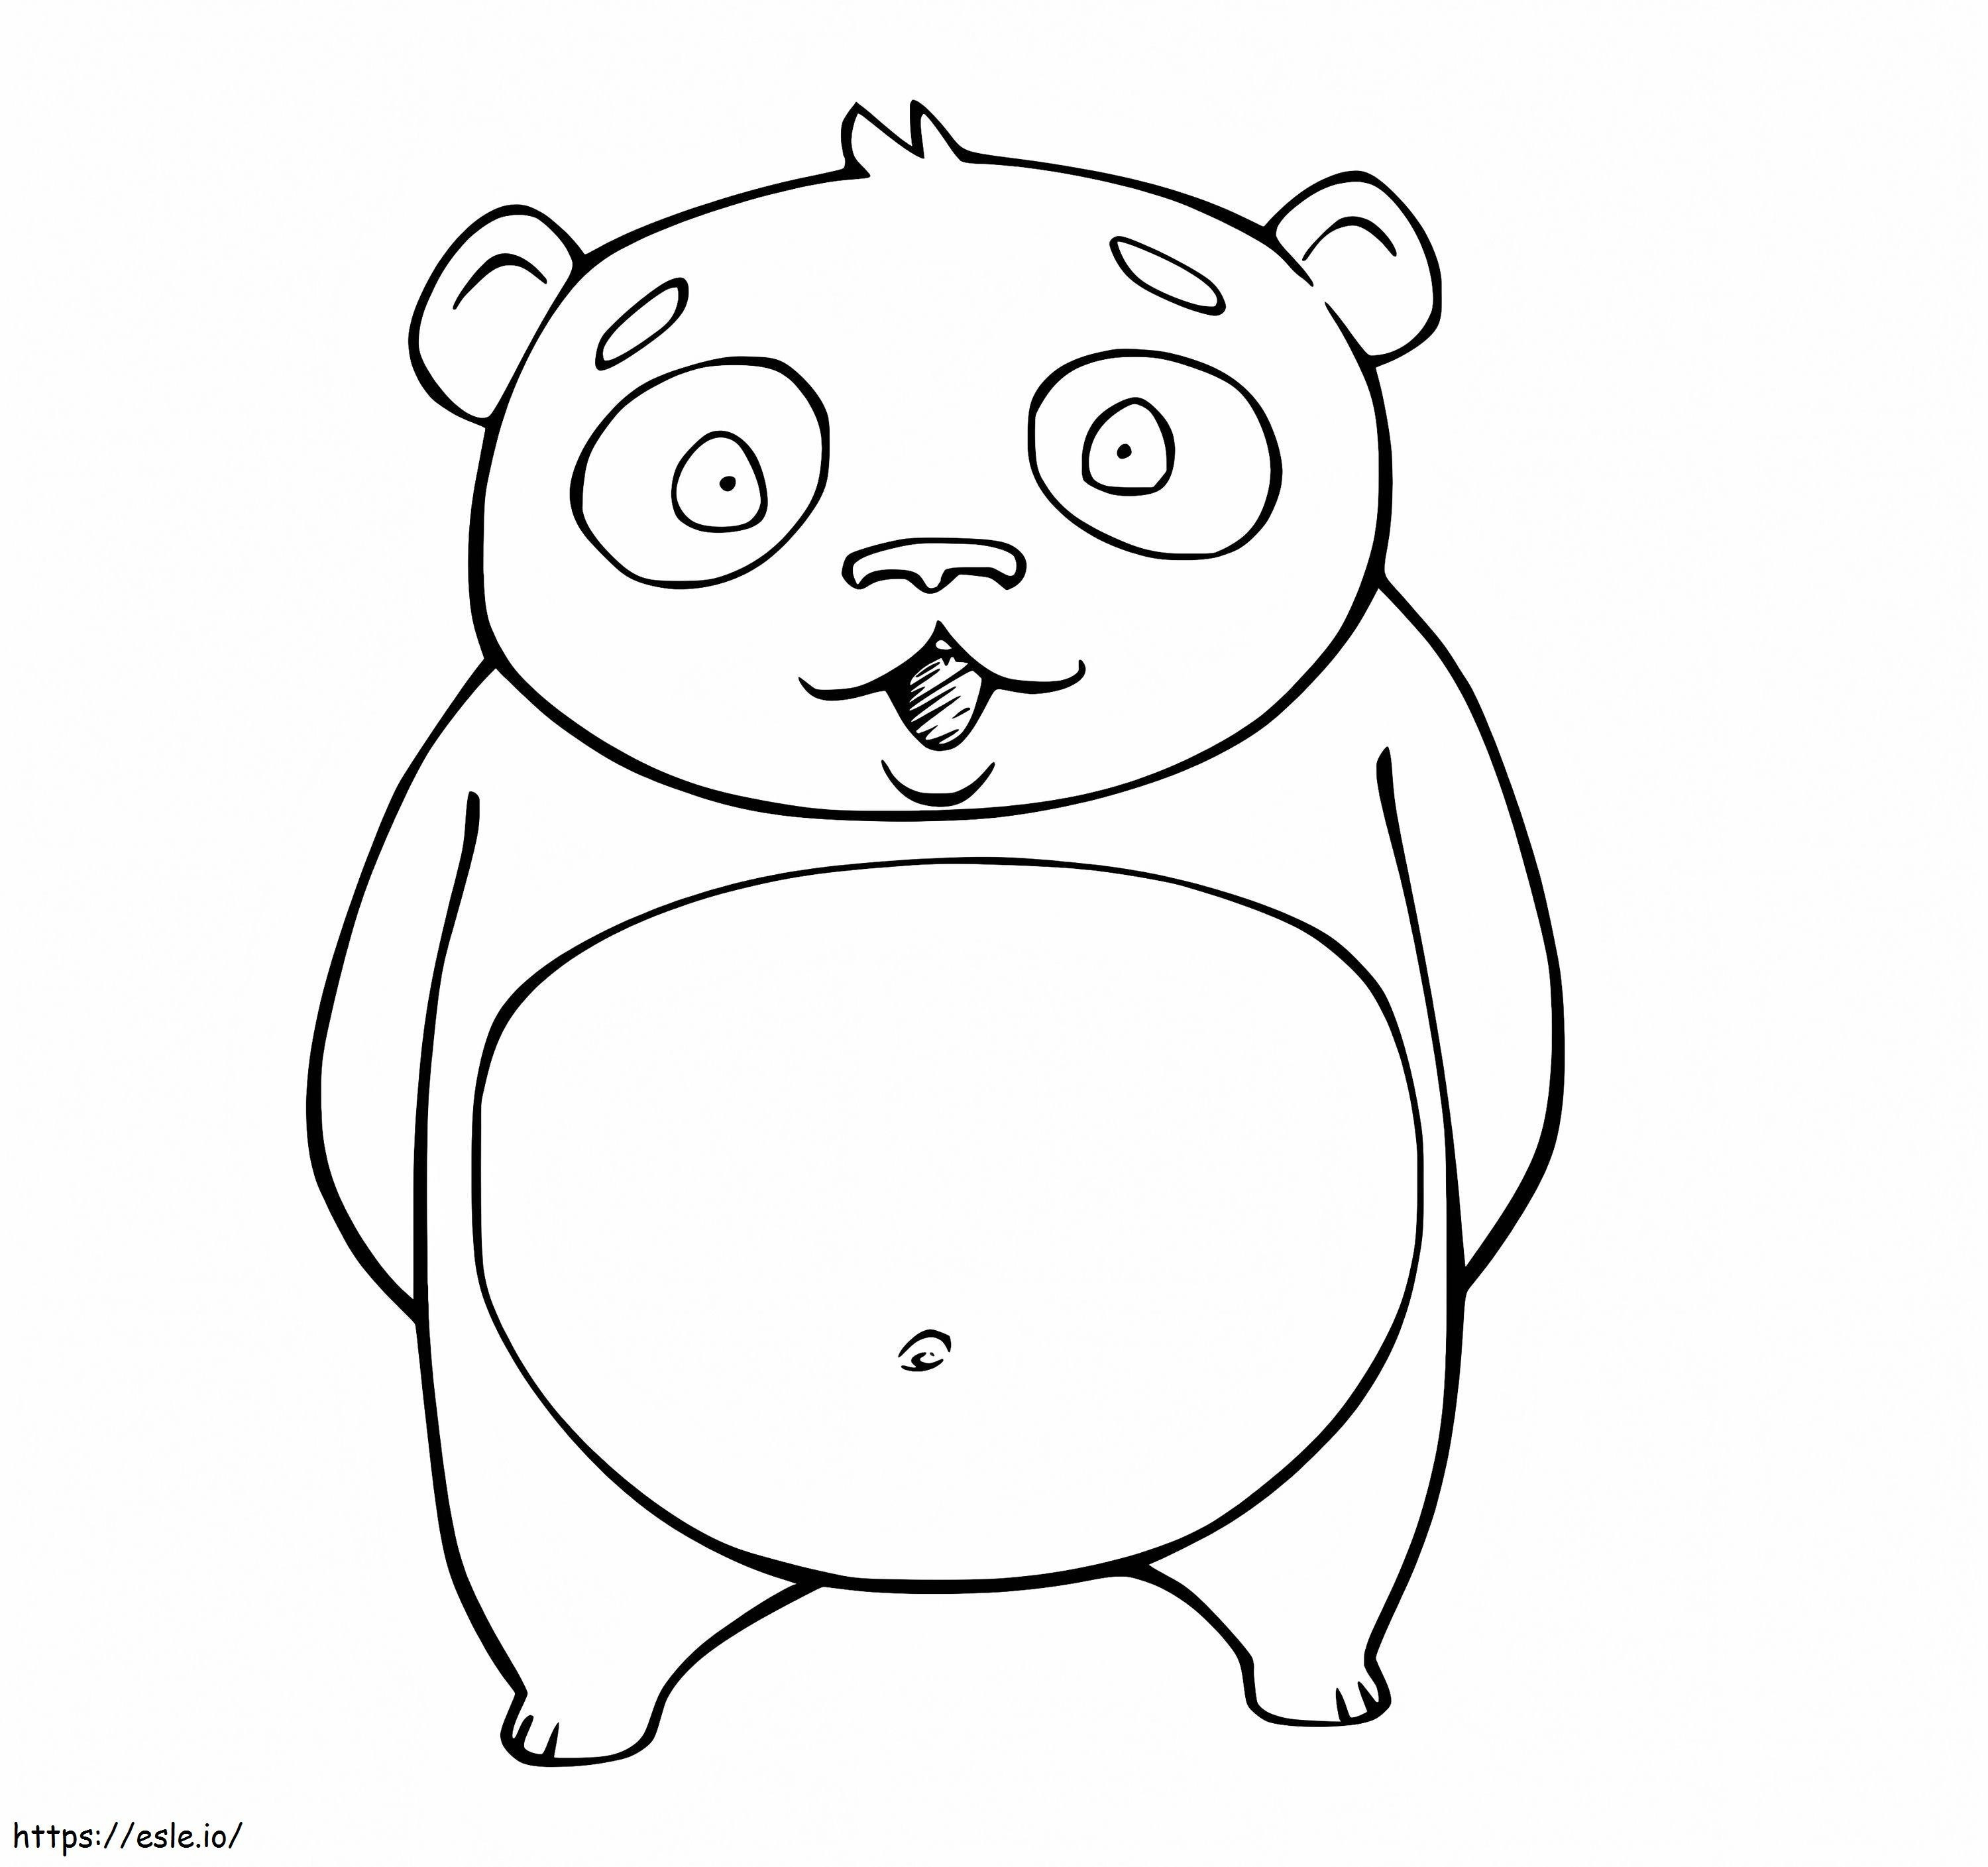 Cartoon Funny Panda coloring page